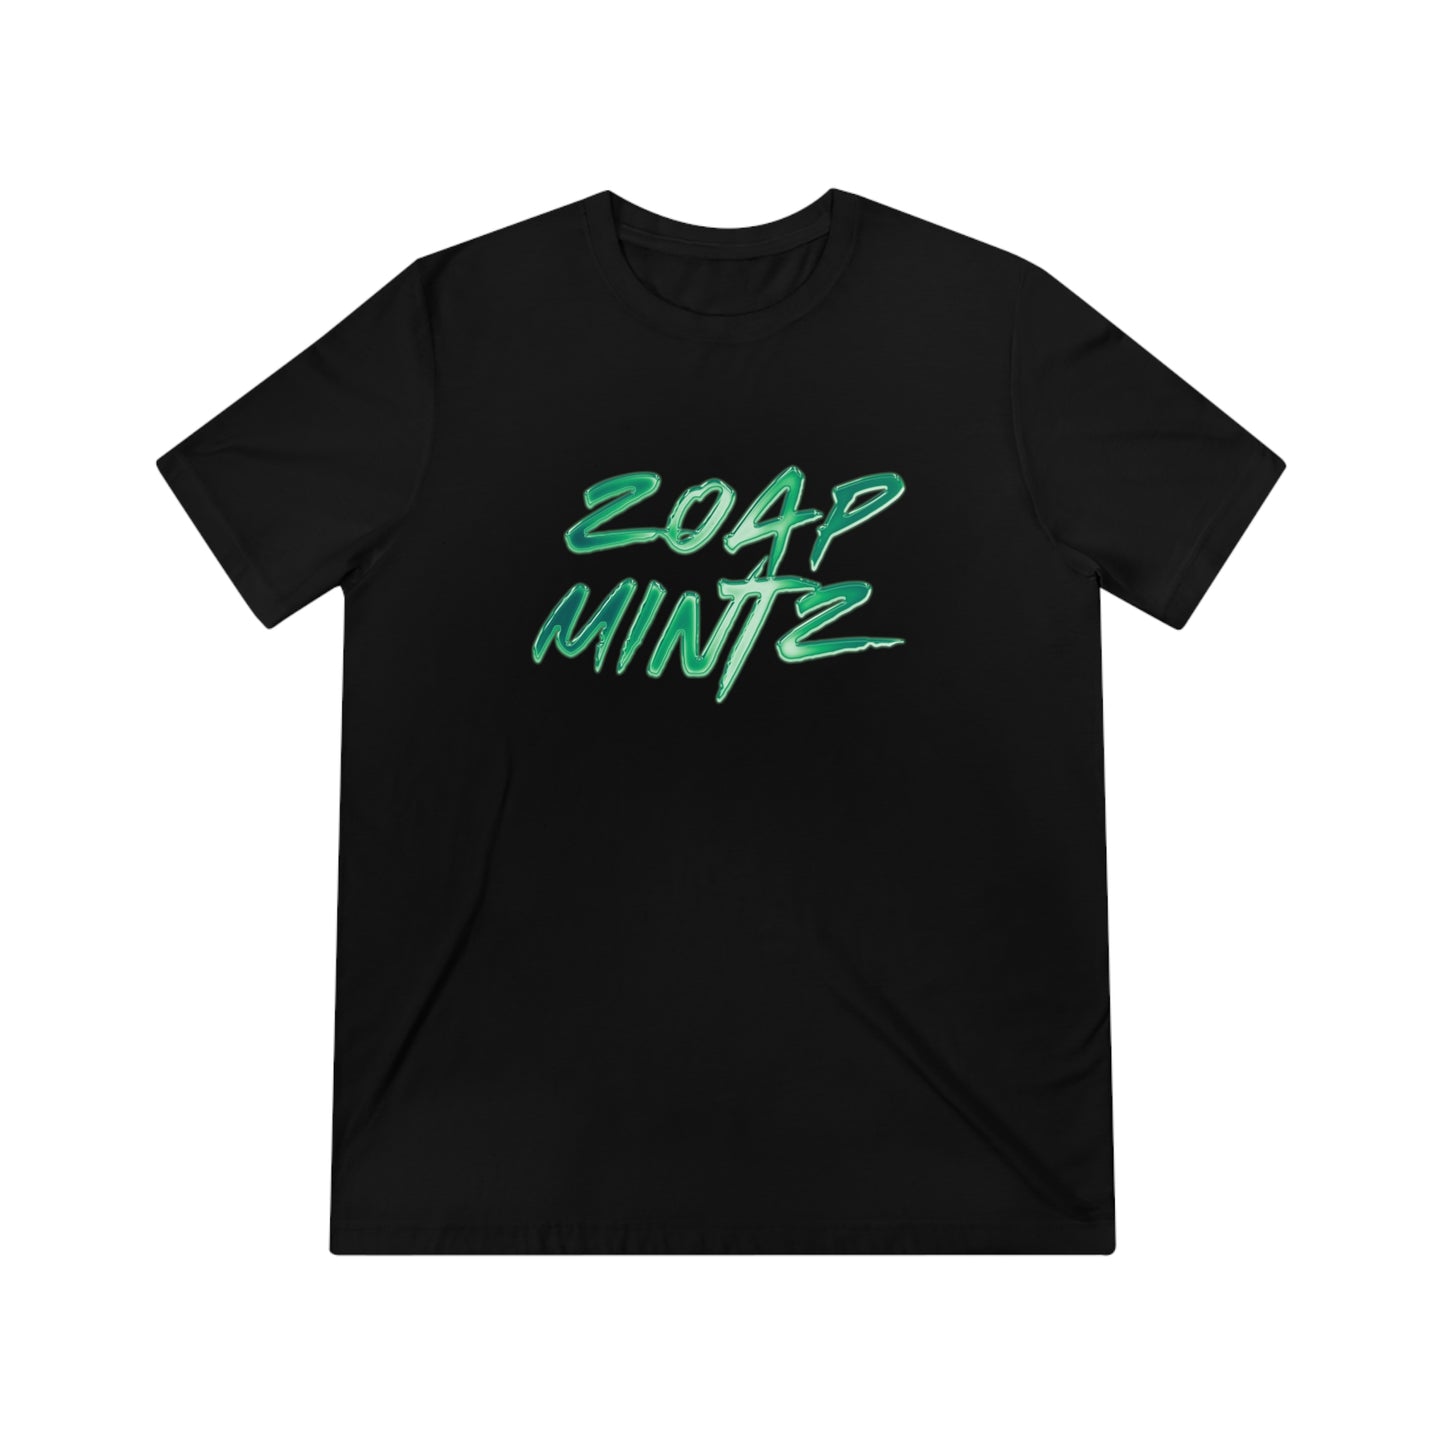 Zoap Mintz - T-Shirt